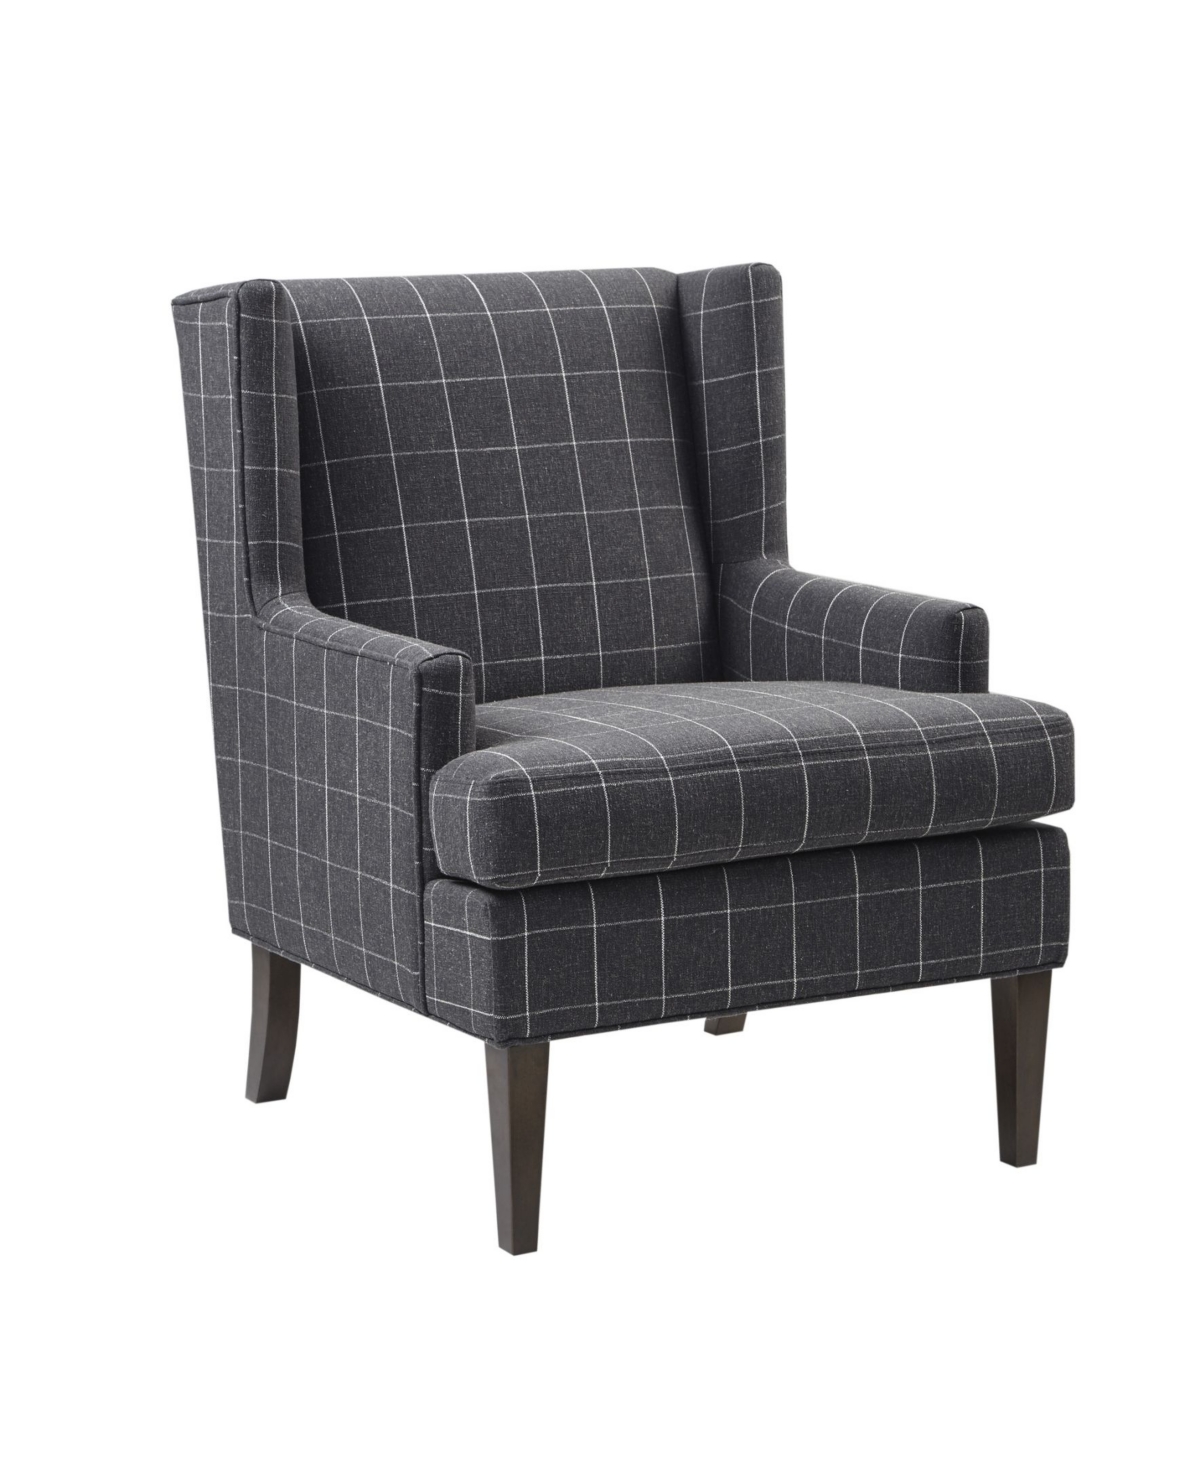 Martha Stewart Collection Decker Accent Chair In Charcoal